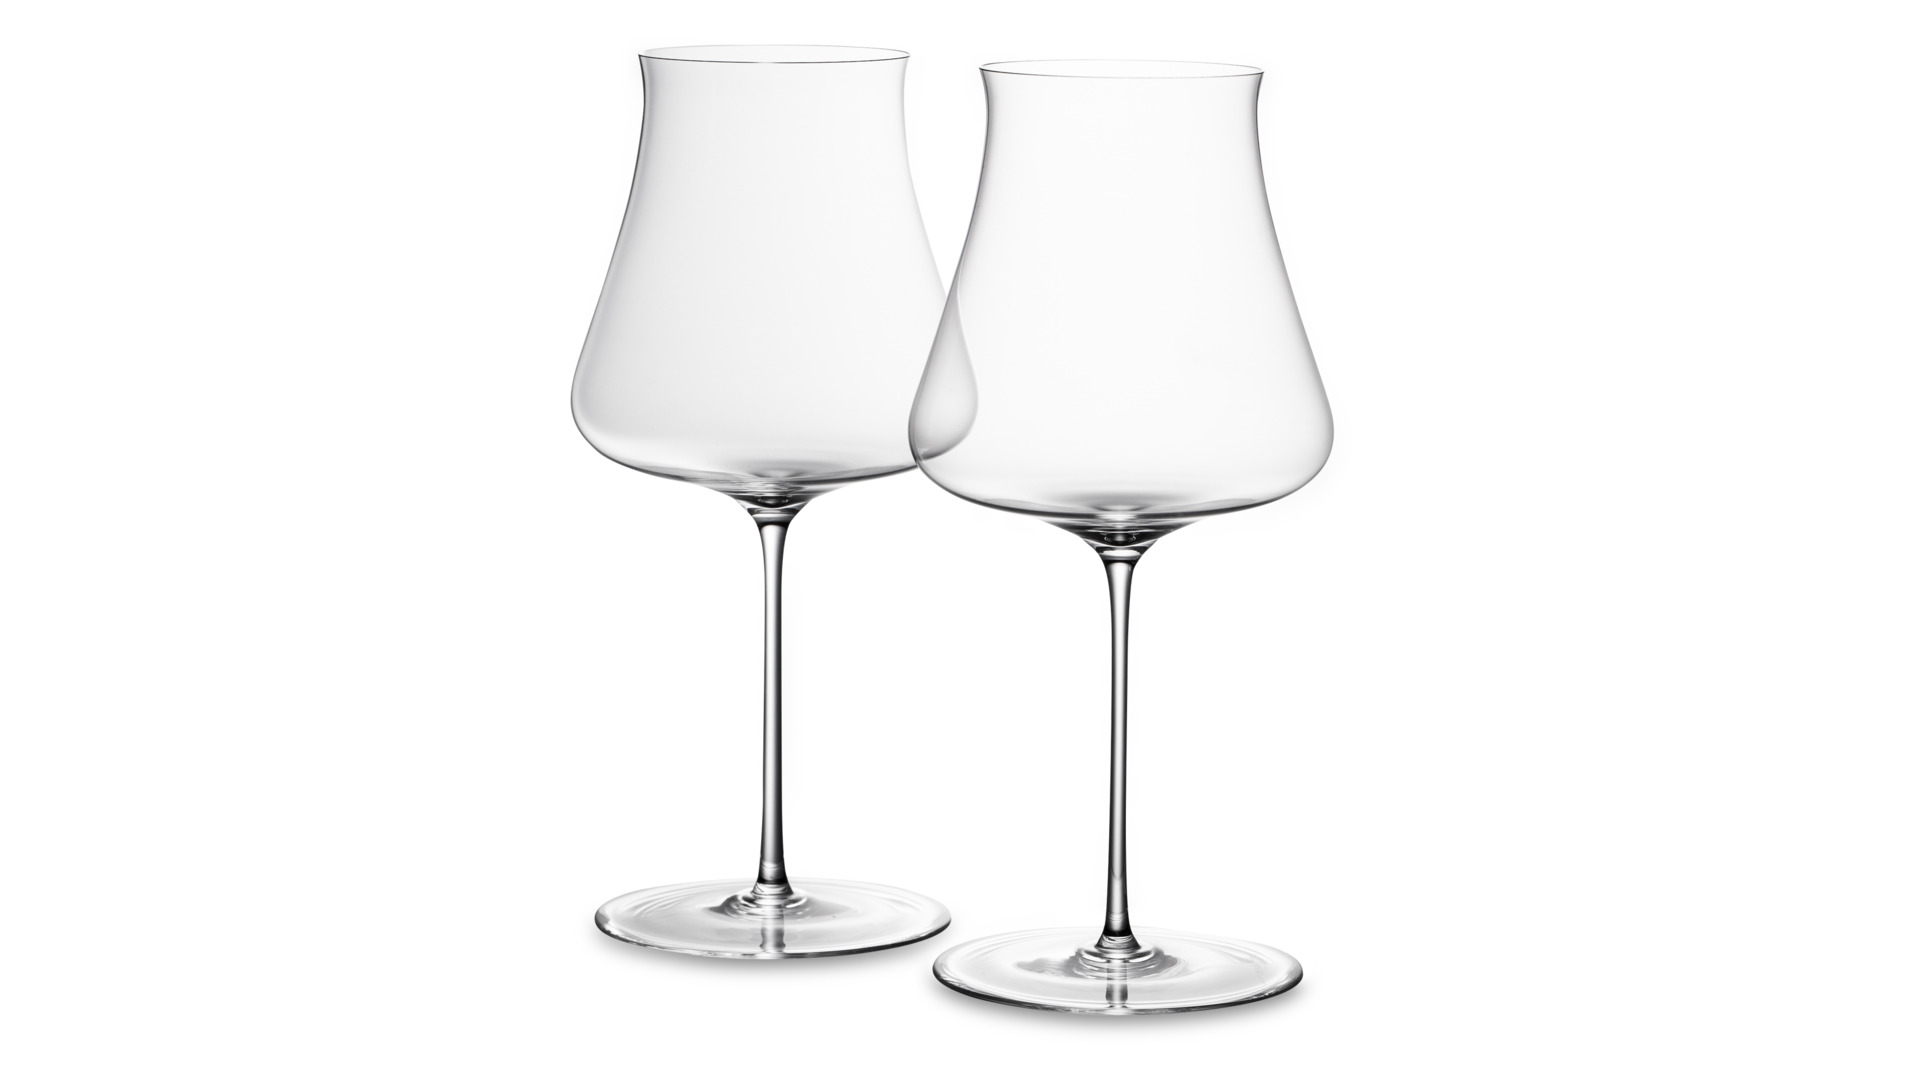 Набор бокалов для белого вина Halimba Crystal Lady 420 мл, 2 шт, хрусталь, п/к